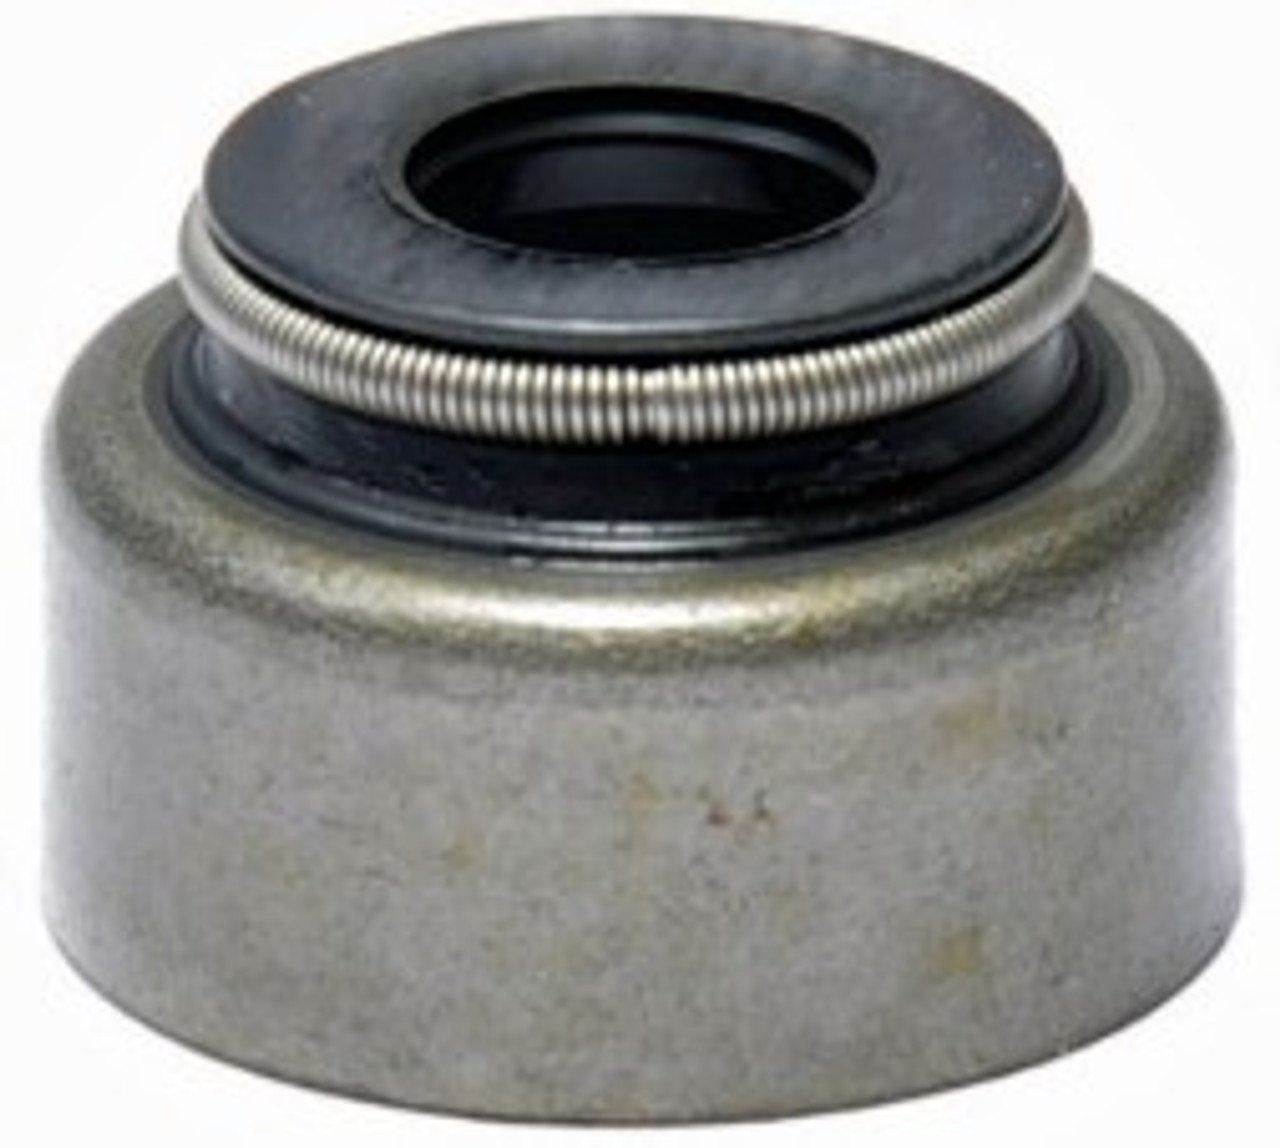 Valve Stem Oil Seal - 1991 Mercury Capri 1.6L (S475V-20.J96)